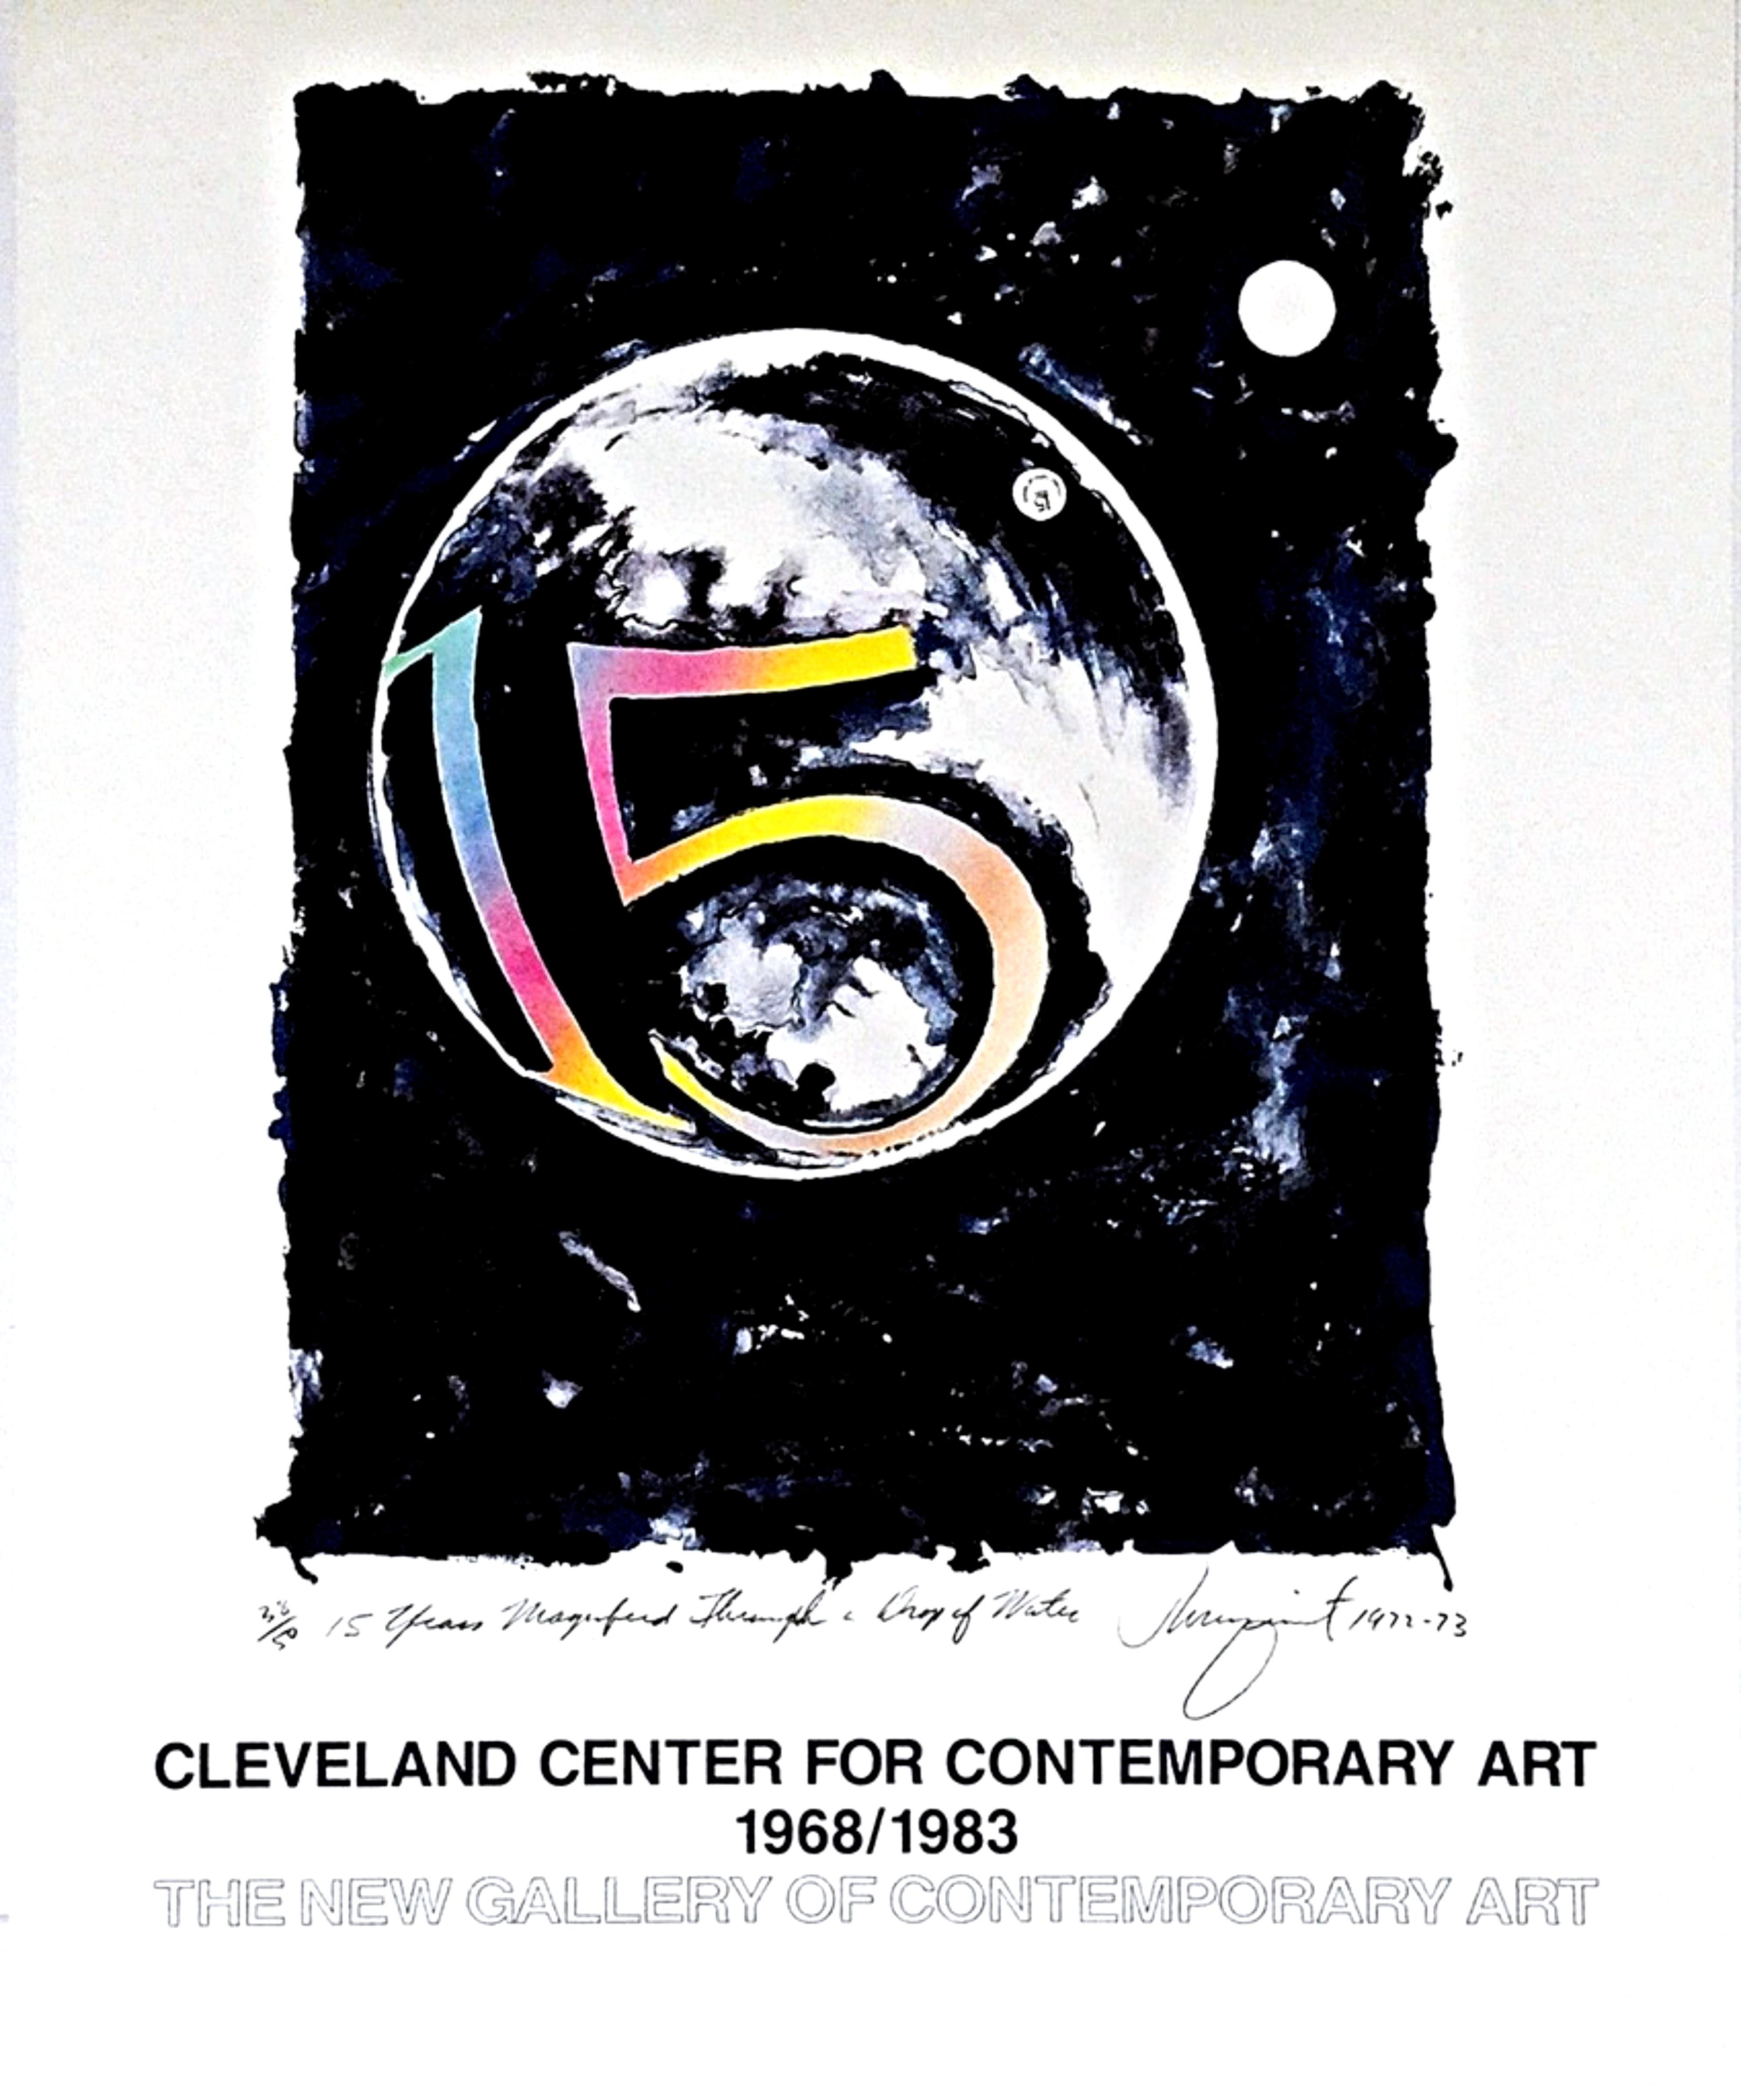 Affiche de James Rosenquist au Cleveland Center for Contemporary Art 1968-1983